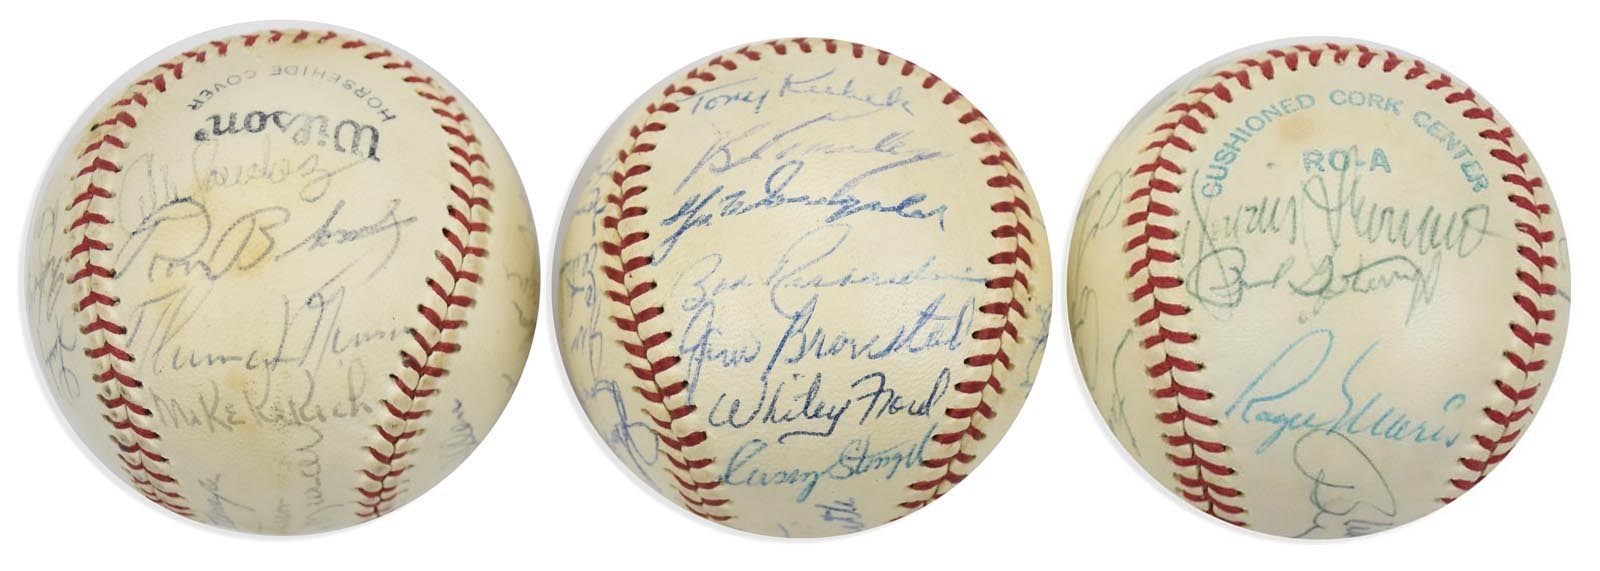 - 1950s-70s New York Yankees Team Signed Baseballs w/Munson & Maris (3)